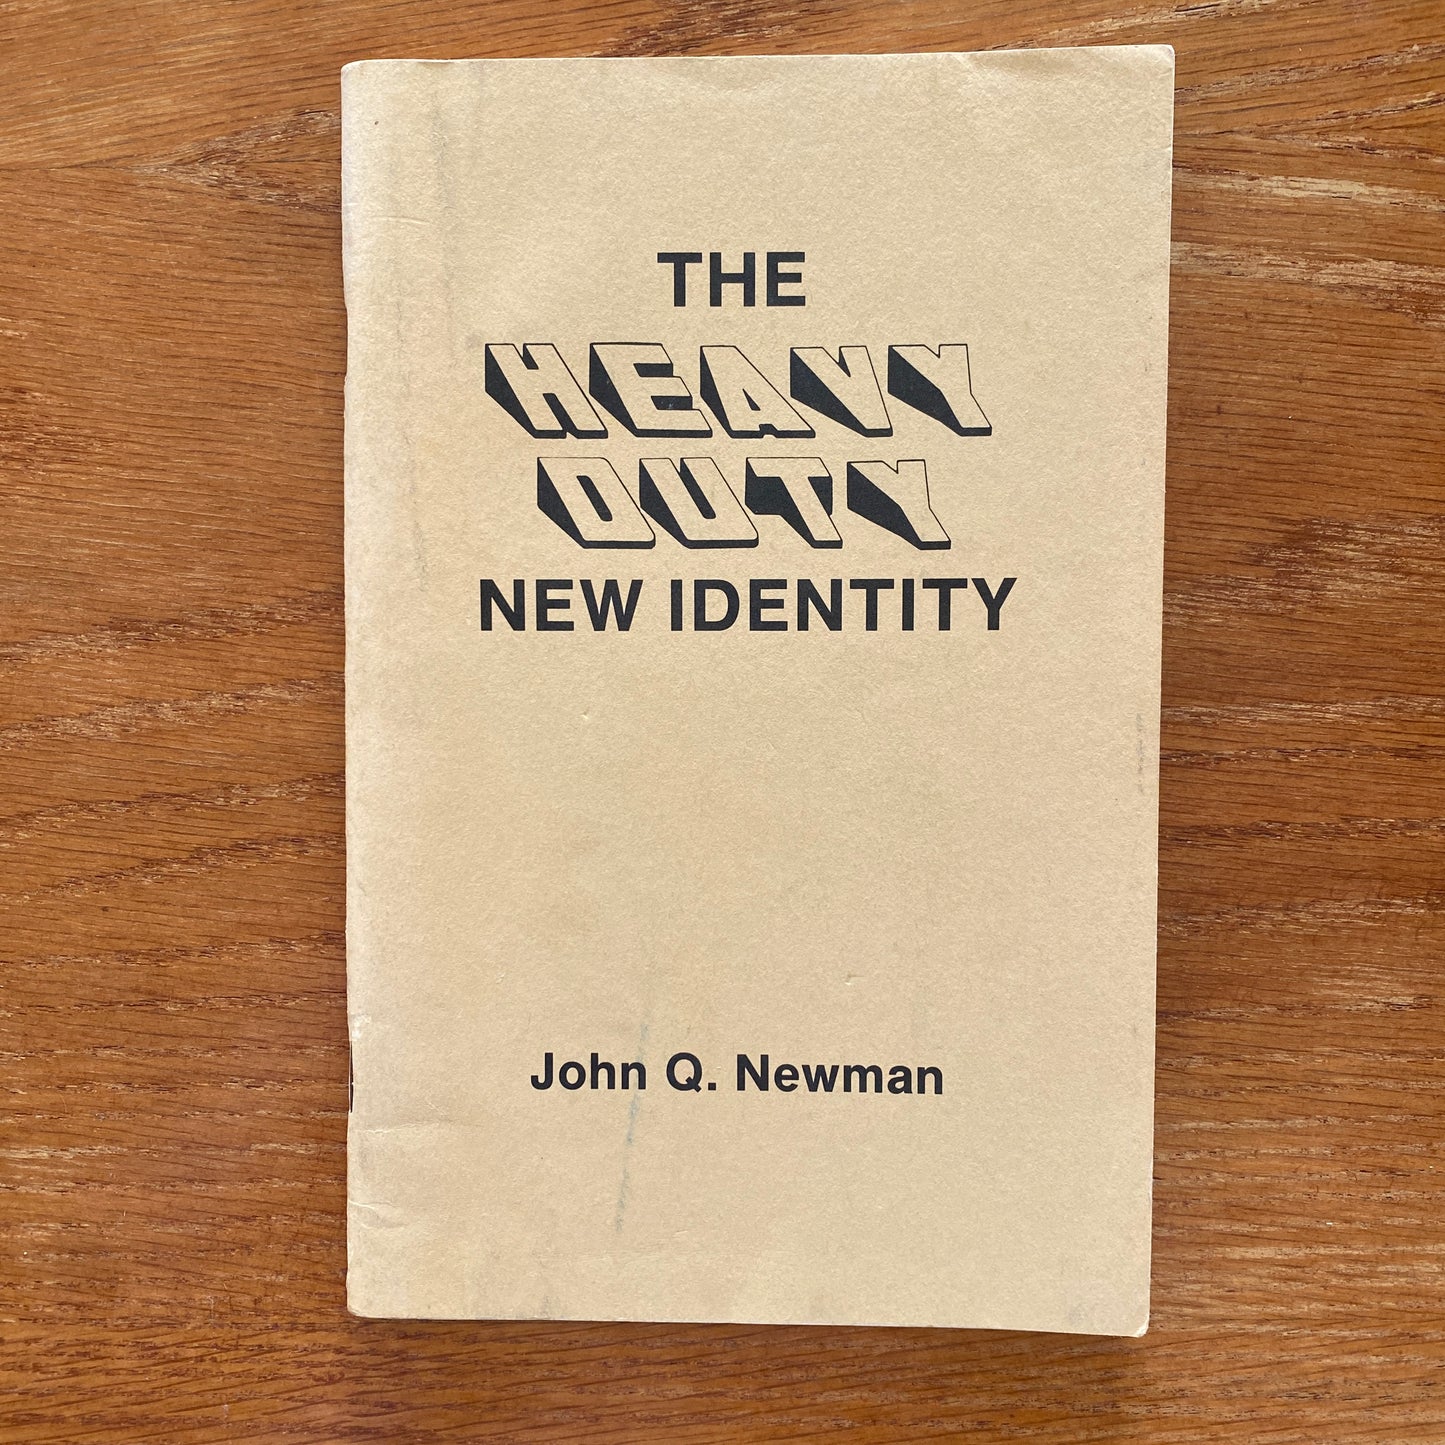 The Heavy Duty New Identity - John Q. Newman